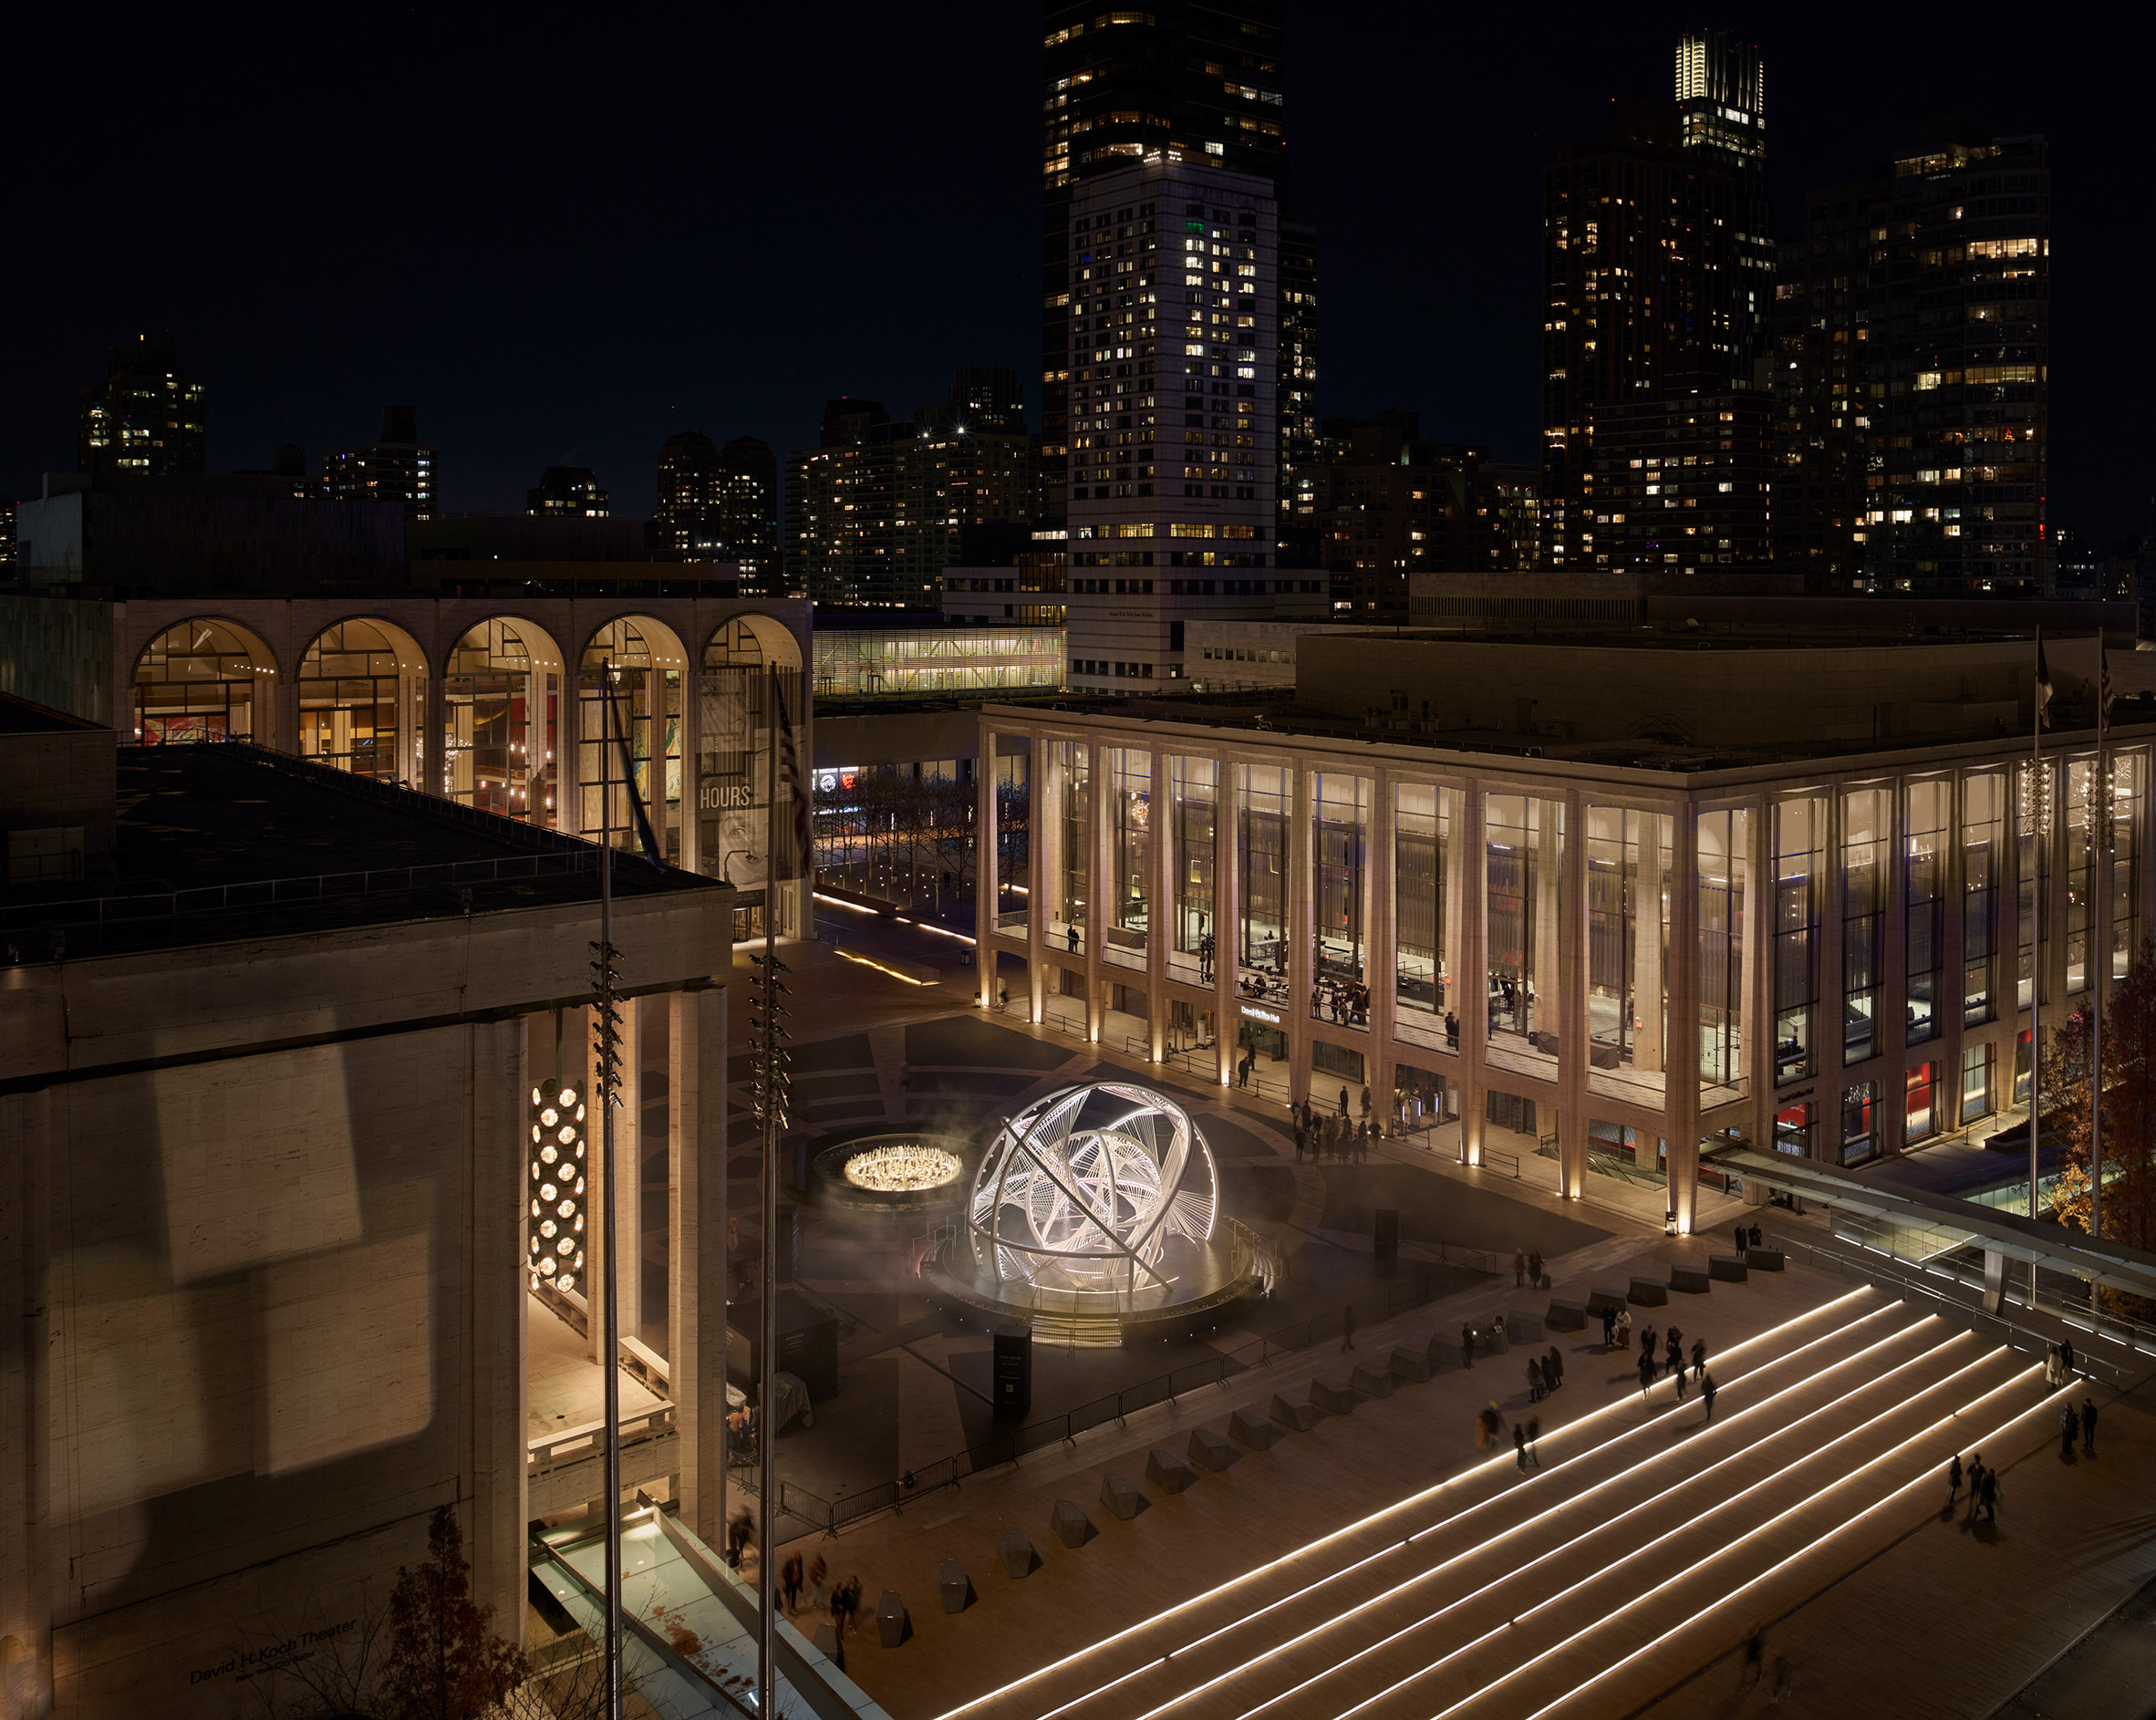 Es Devlin 'Your Voices' choral sculpture lights up New York